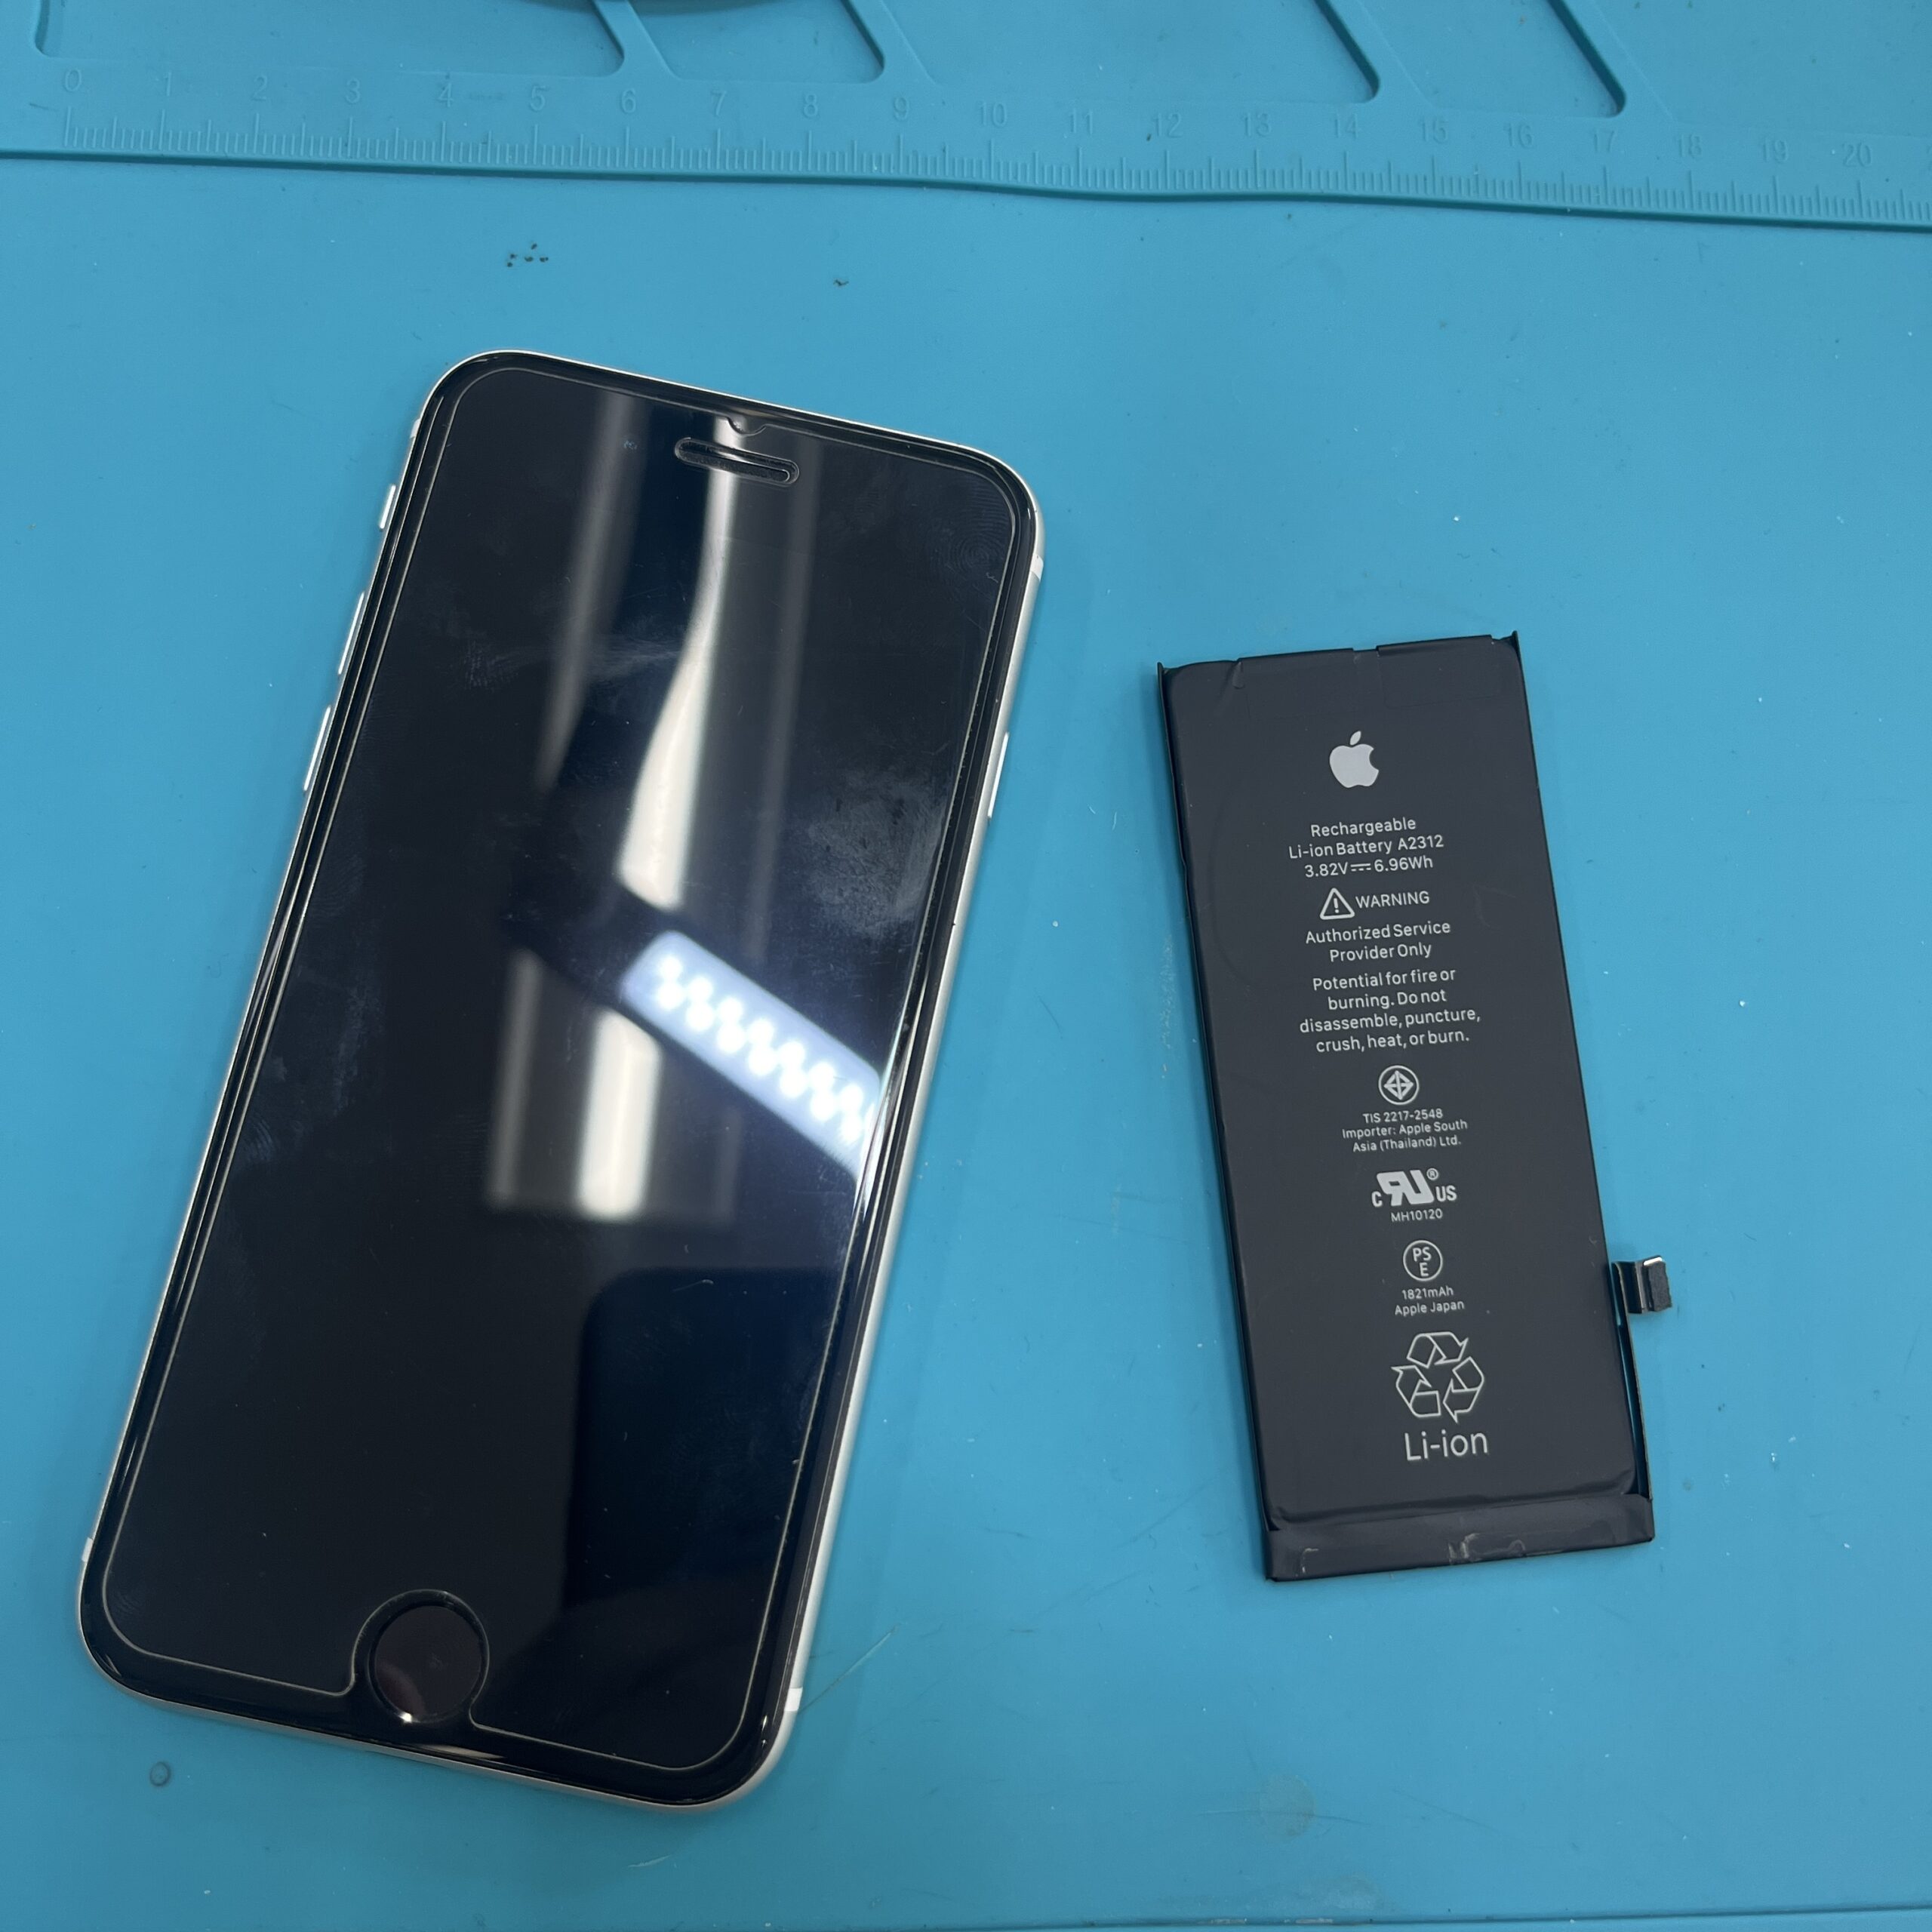 iPhone SE ジャンク品 動作しません 充電不可 詳細不明 部品取り用など 輝い - DTM・DAW